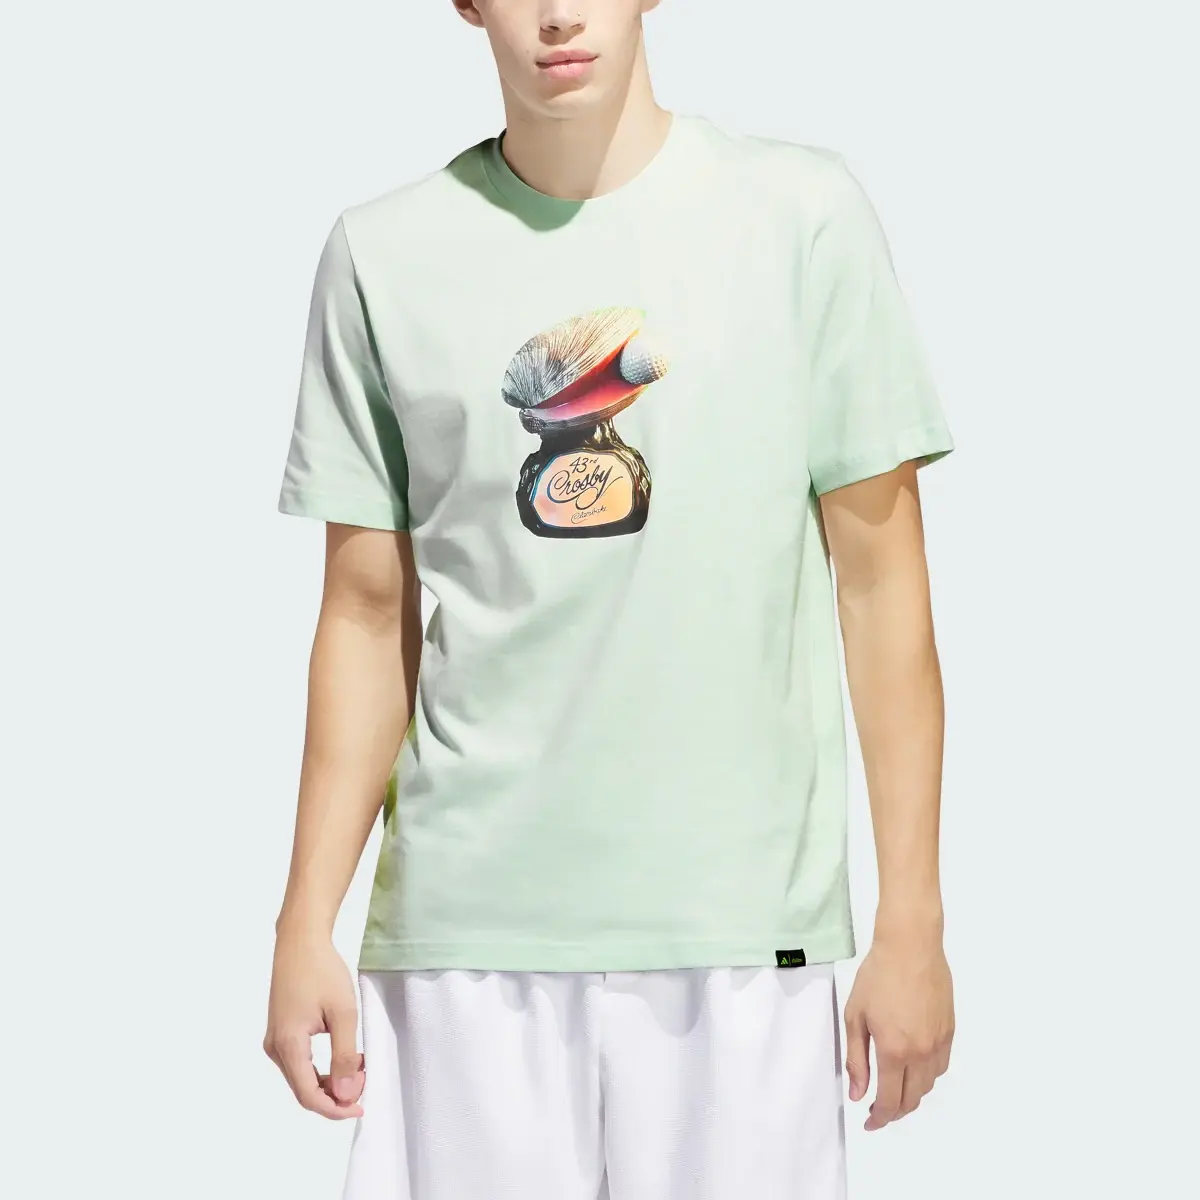 Adidas T-shirt graphique adidas x Malbon. 1